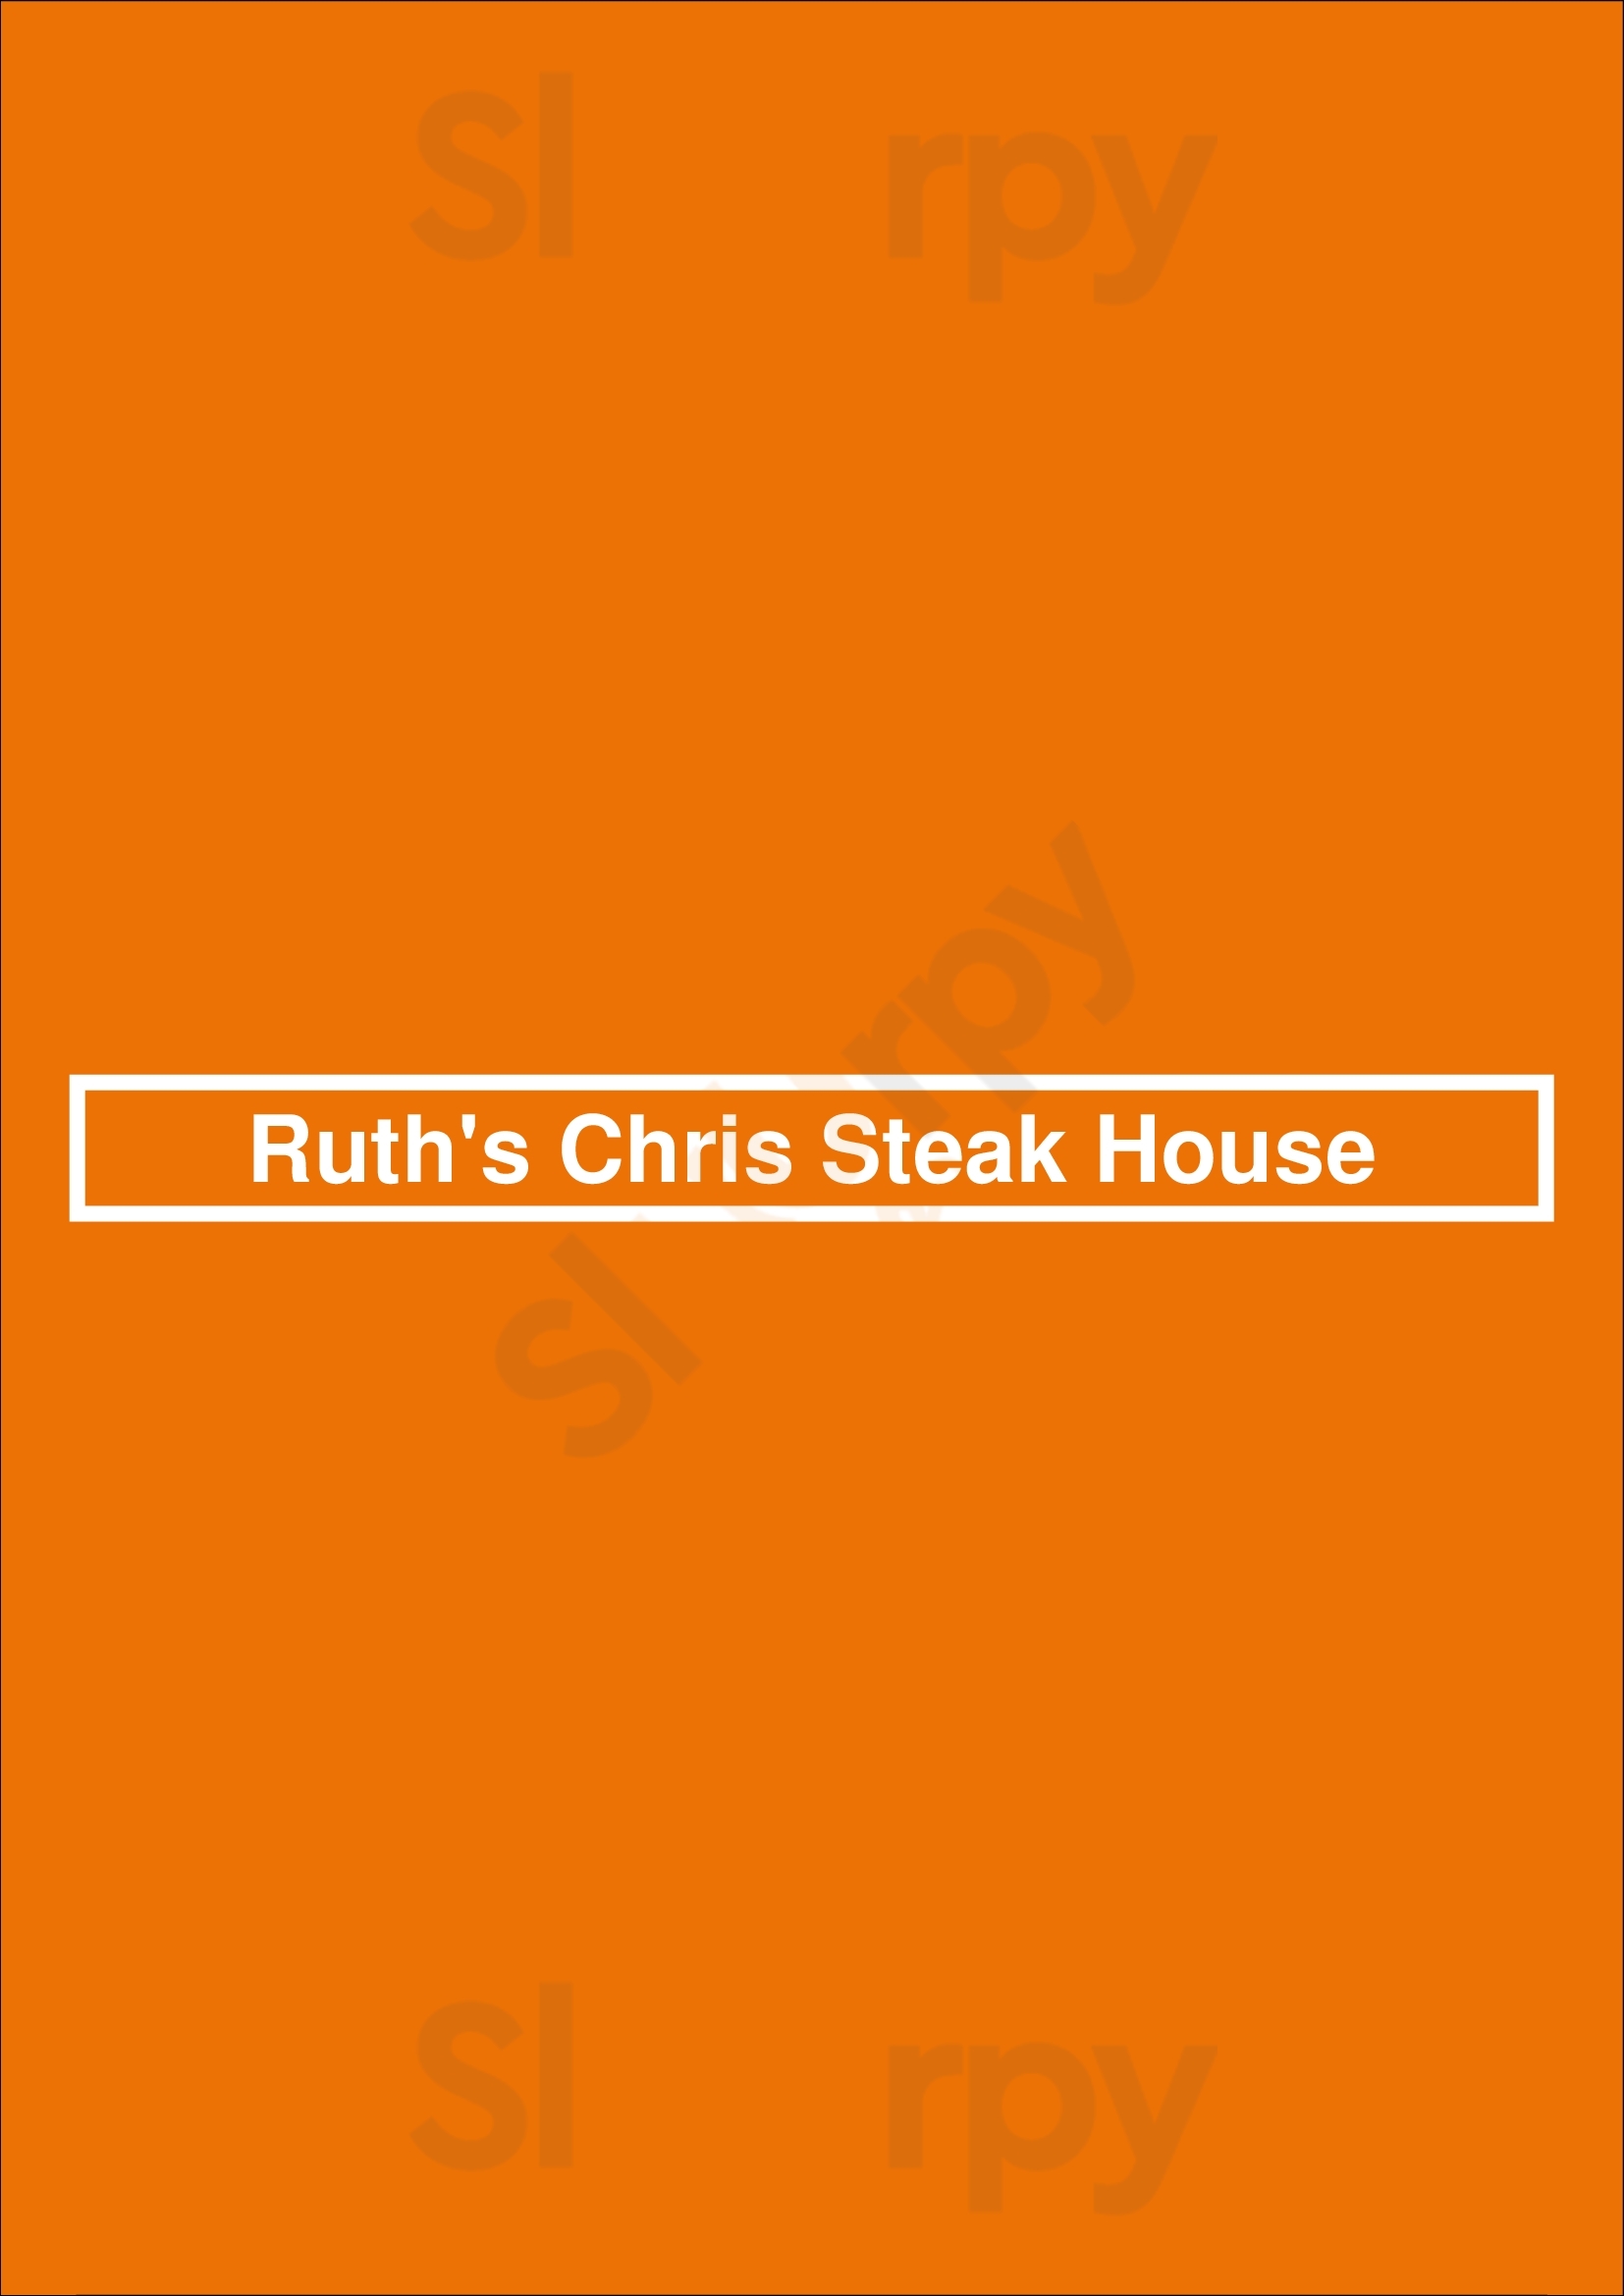 Ruth's Chris Steak House San Francisco Menu - 1